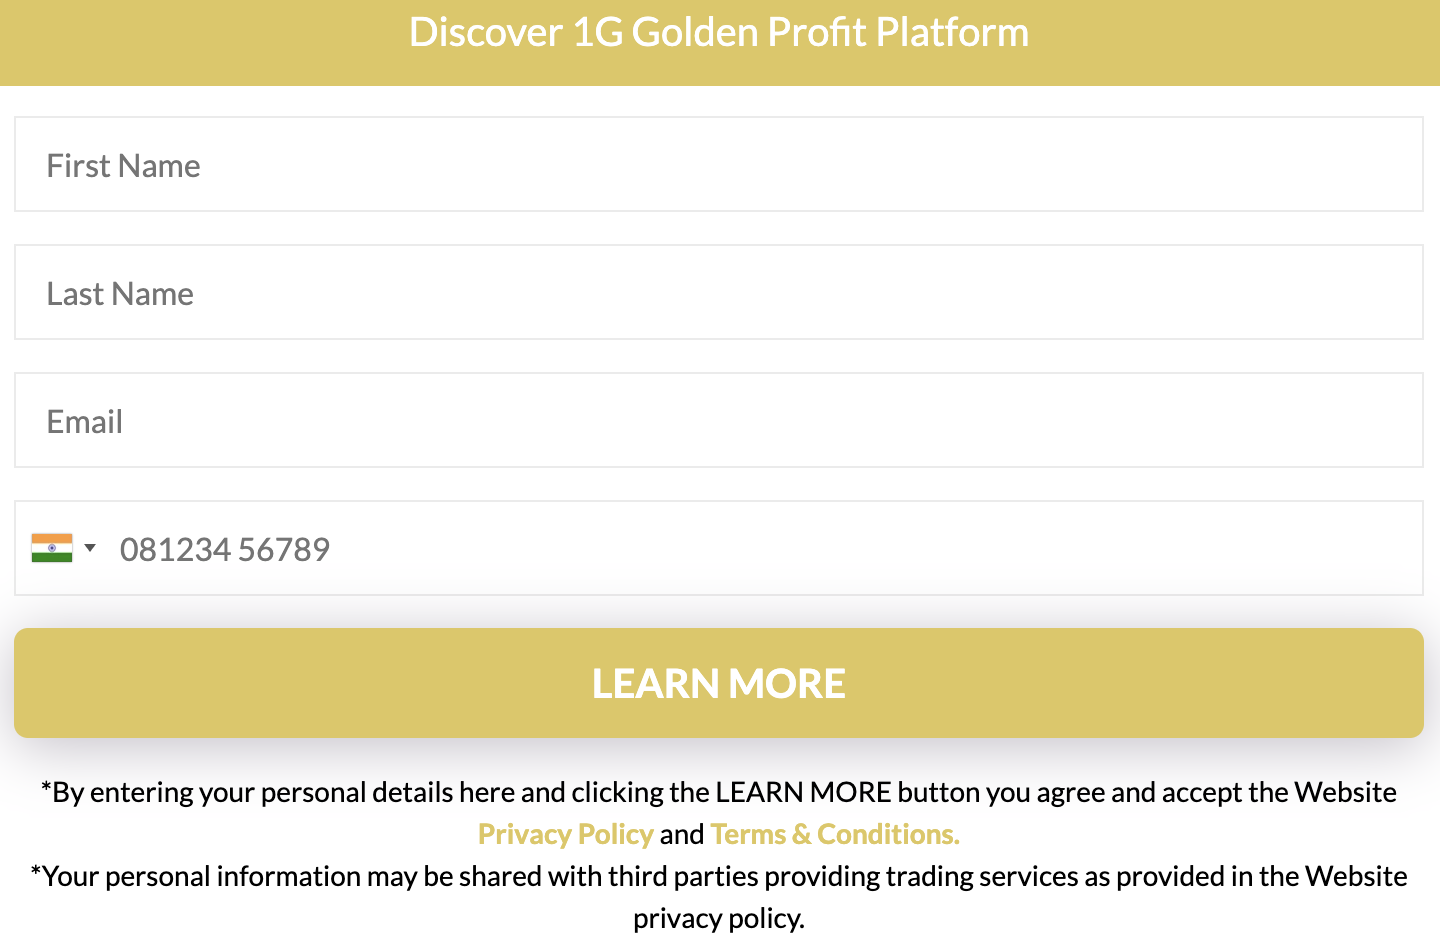 Visit the 1G Golden Profit Website